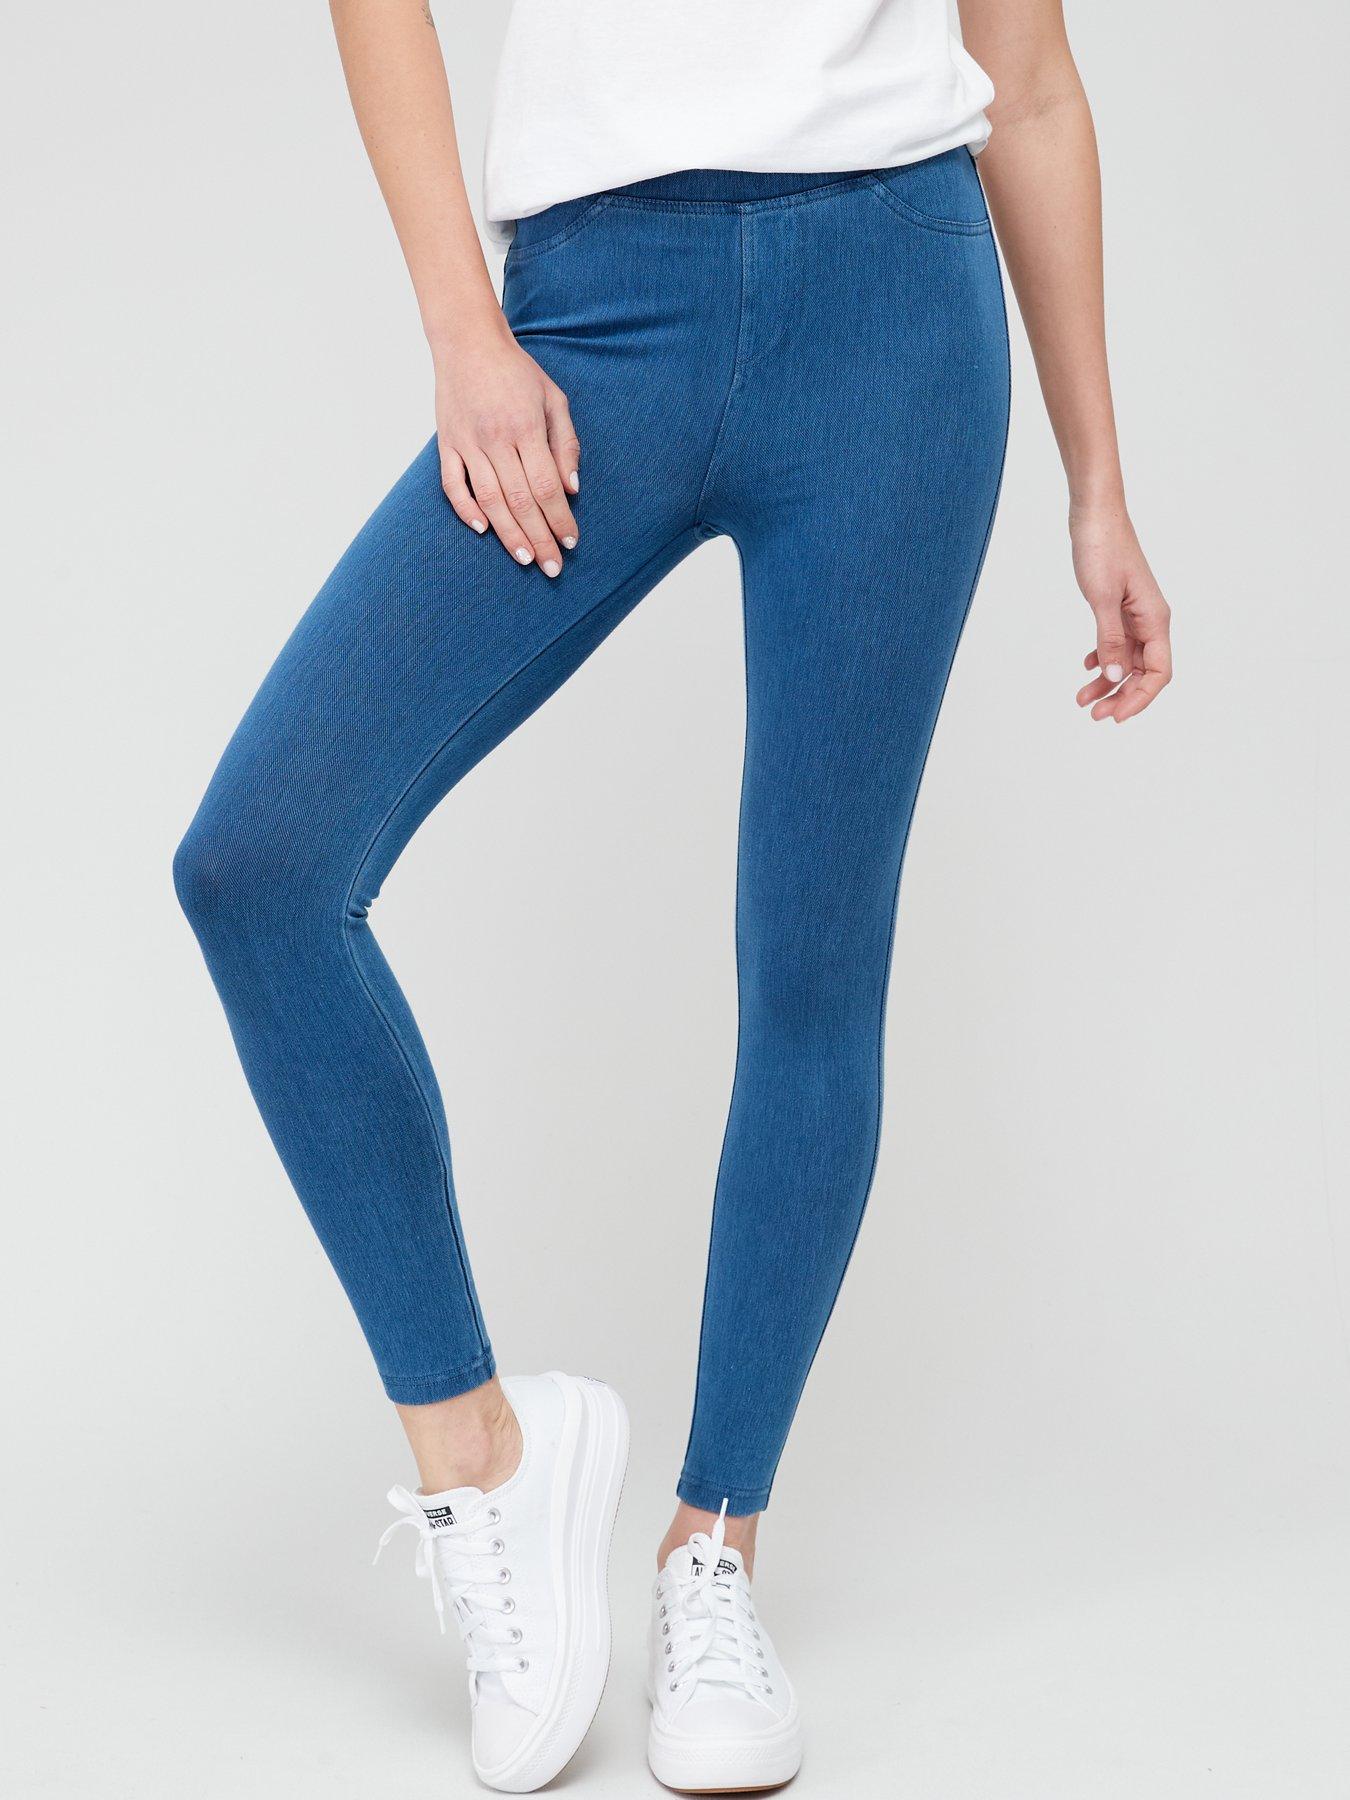 HUE, Jeans, Hue Studio Split Hem Denim Leggings Midnight Rinse Size Small